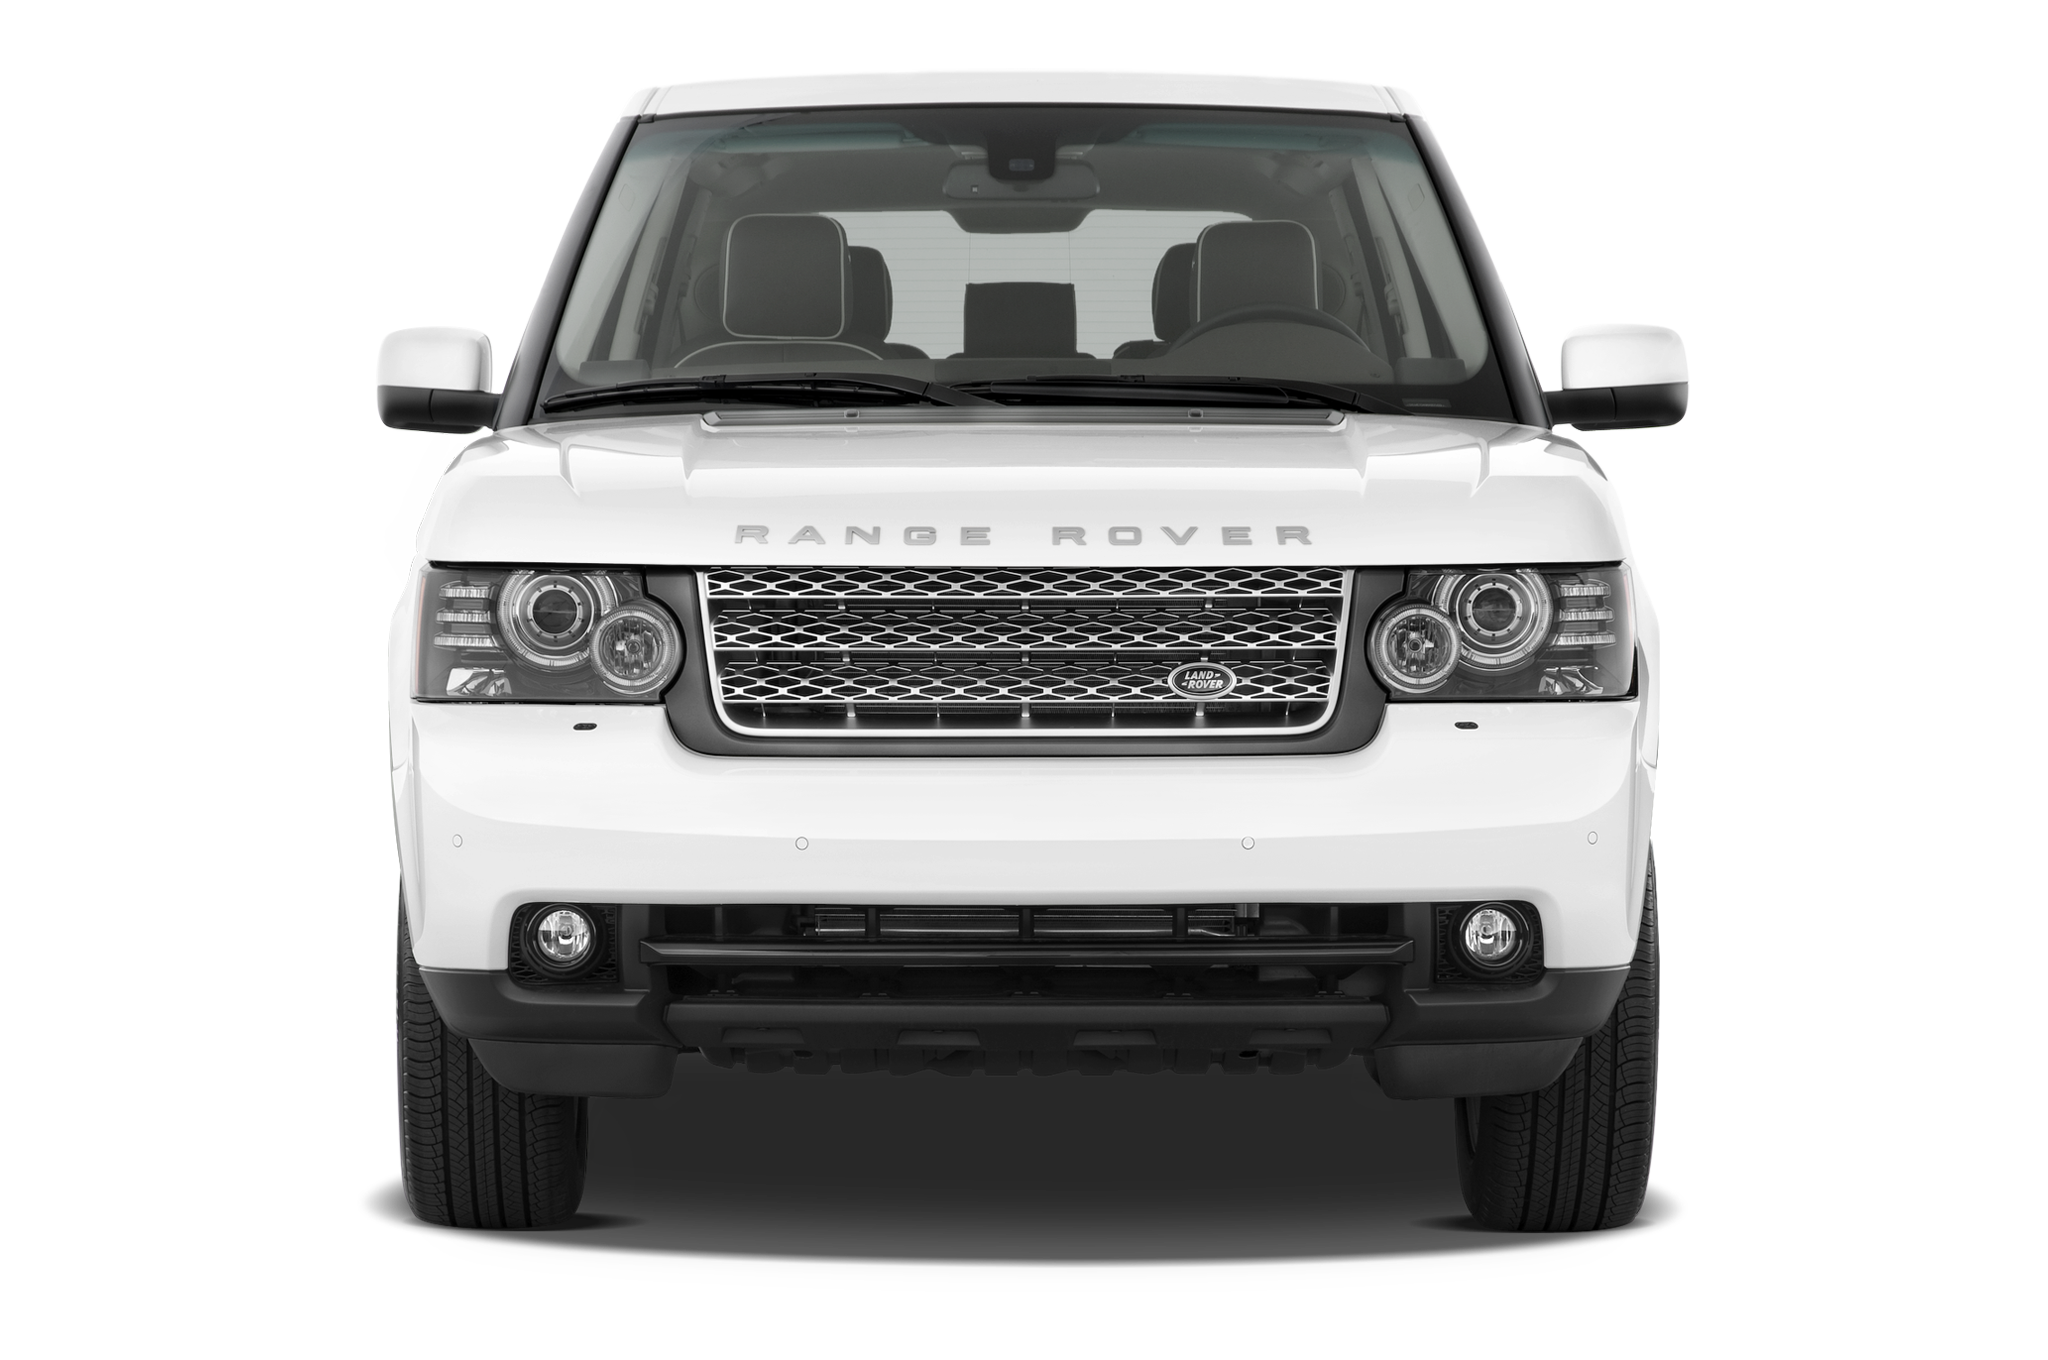 Range Rover PNG Free File Download